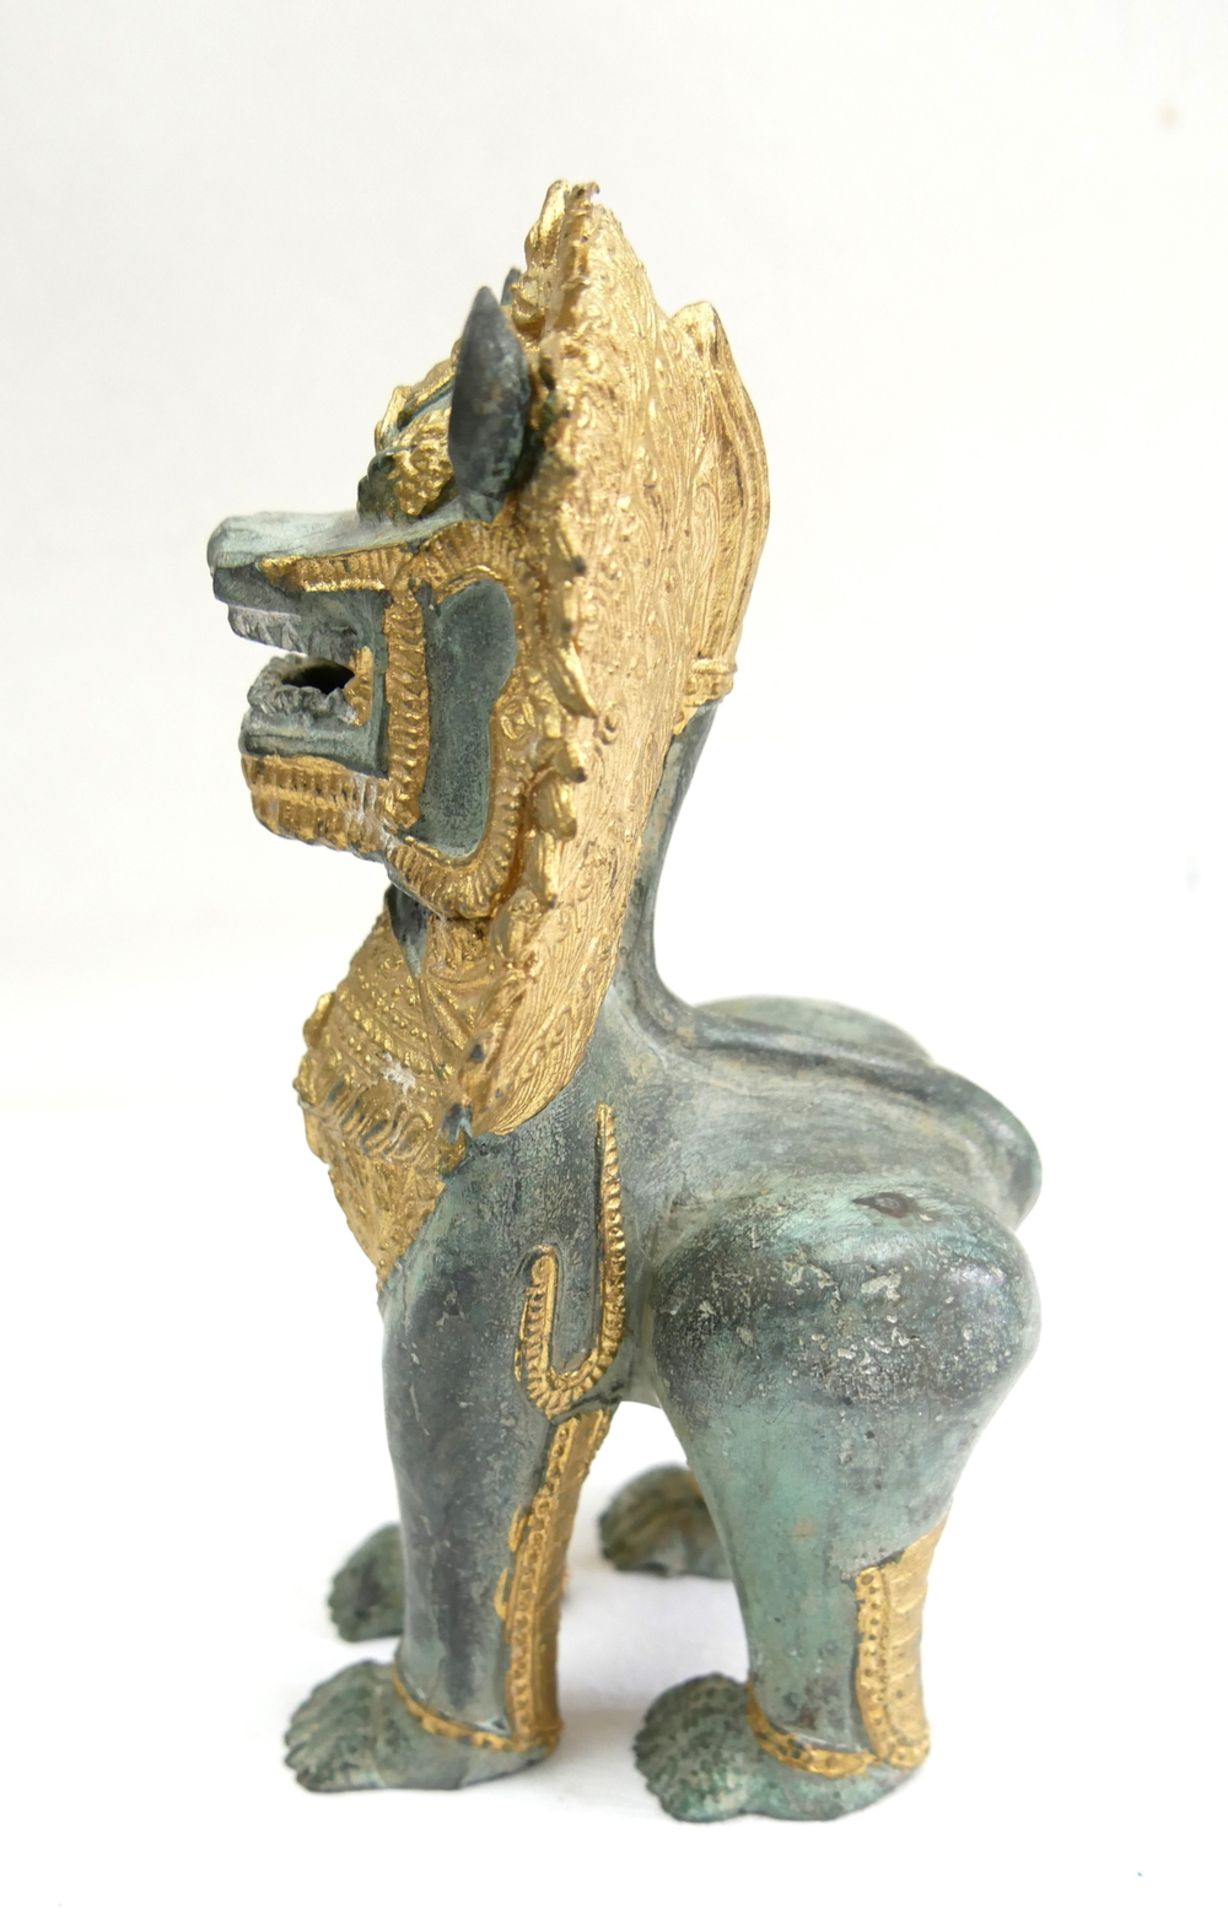 Thai Singha Tempelwächter Löwe - Foo Hund, Steinskulptur mit goldenen Details. Höhe ca. 18 cm - Image 2 of 2